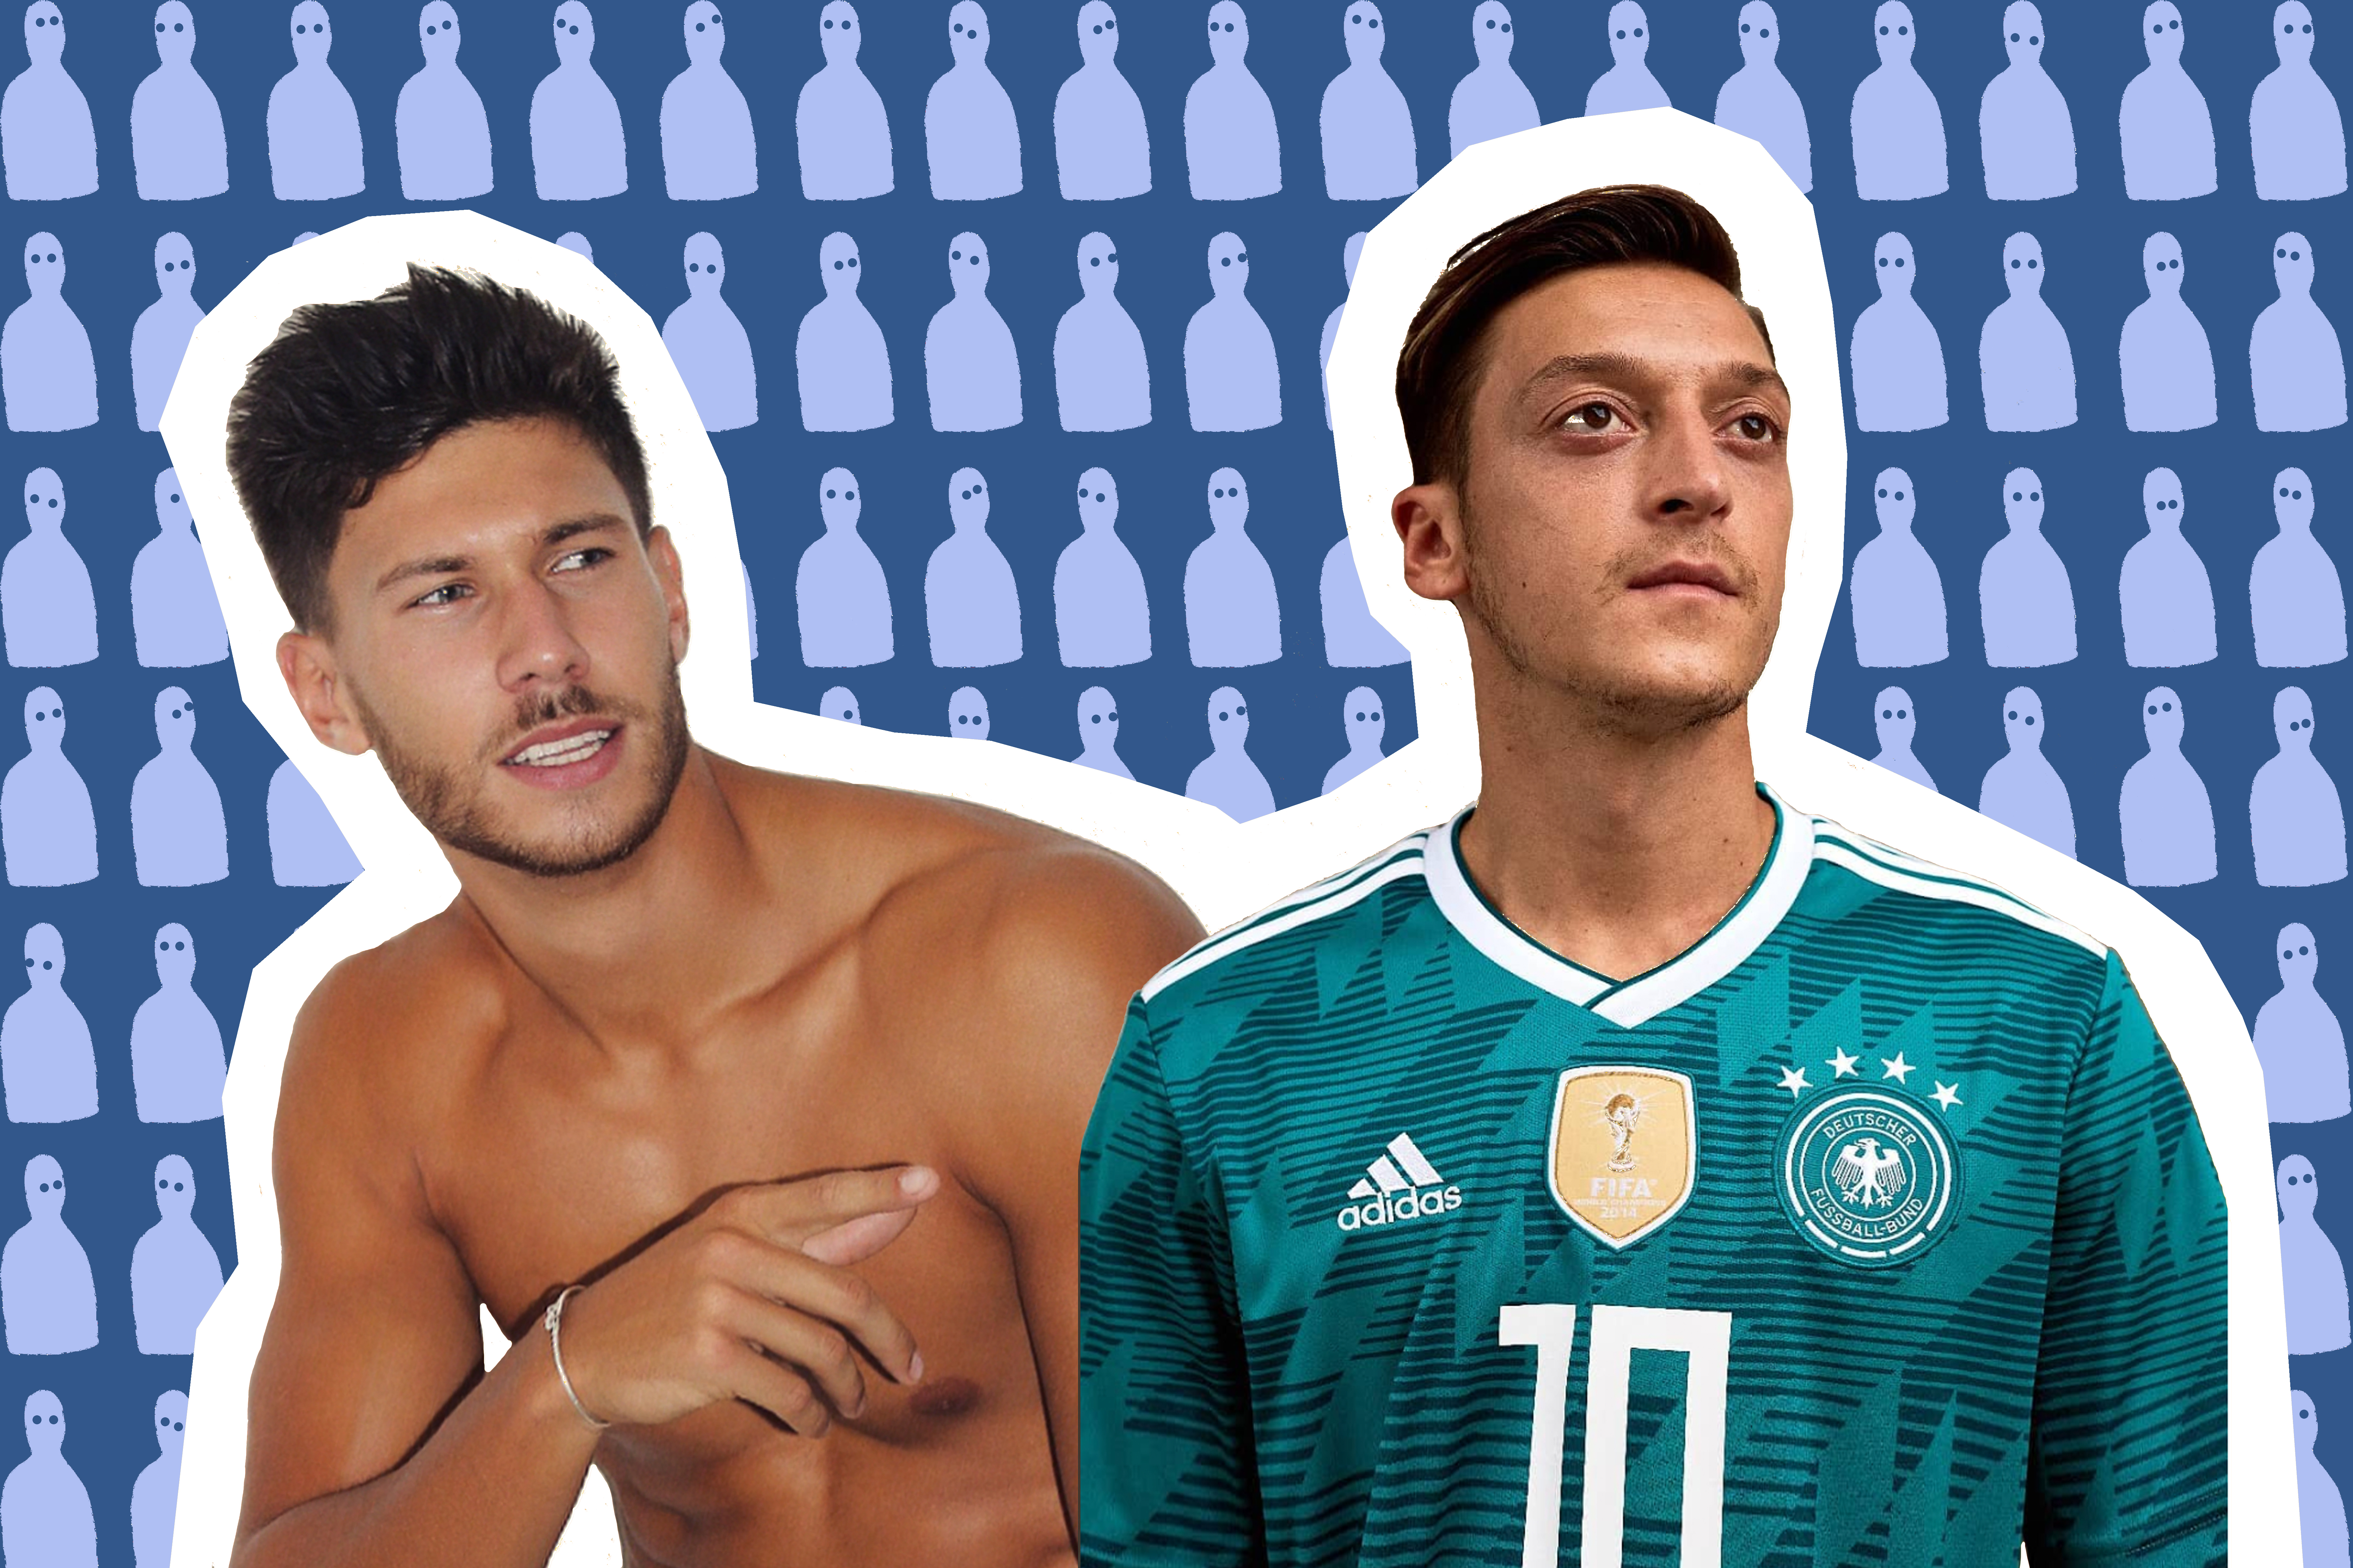 From Oluwajack to Mesut Özil, why is identity decided by popularity?